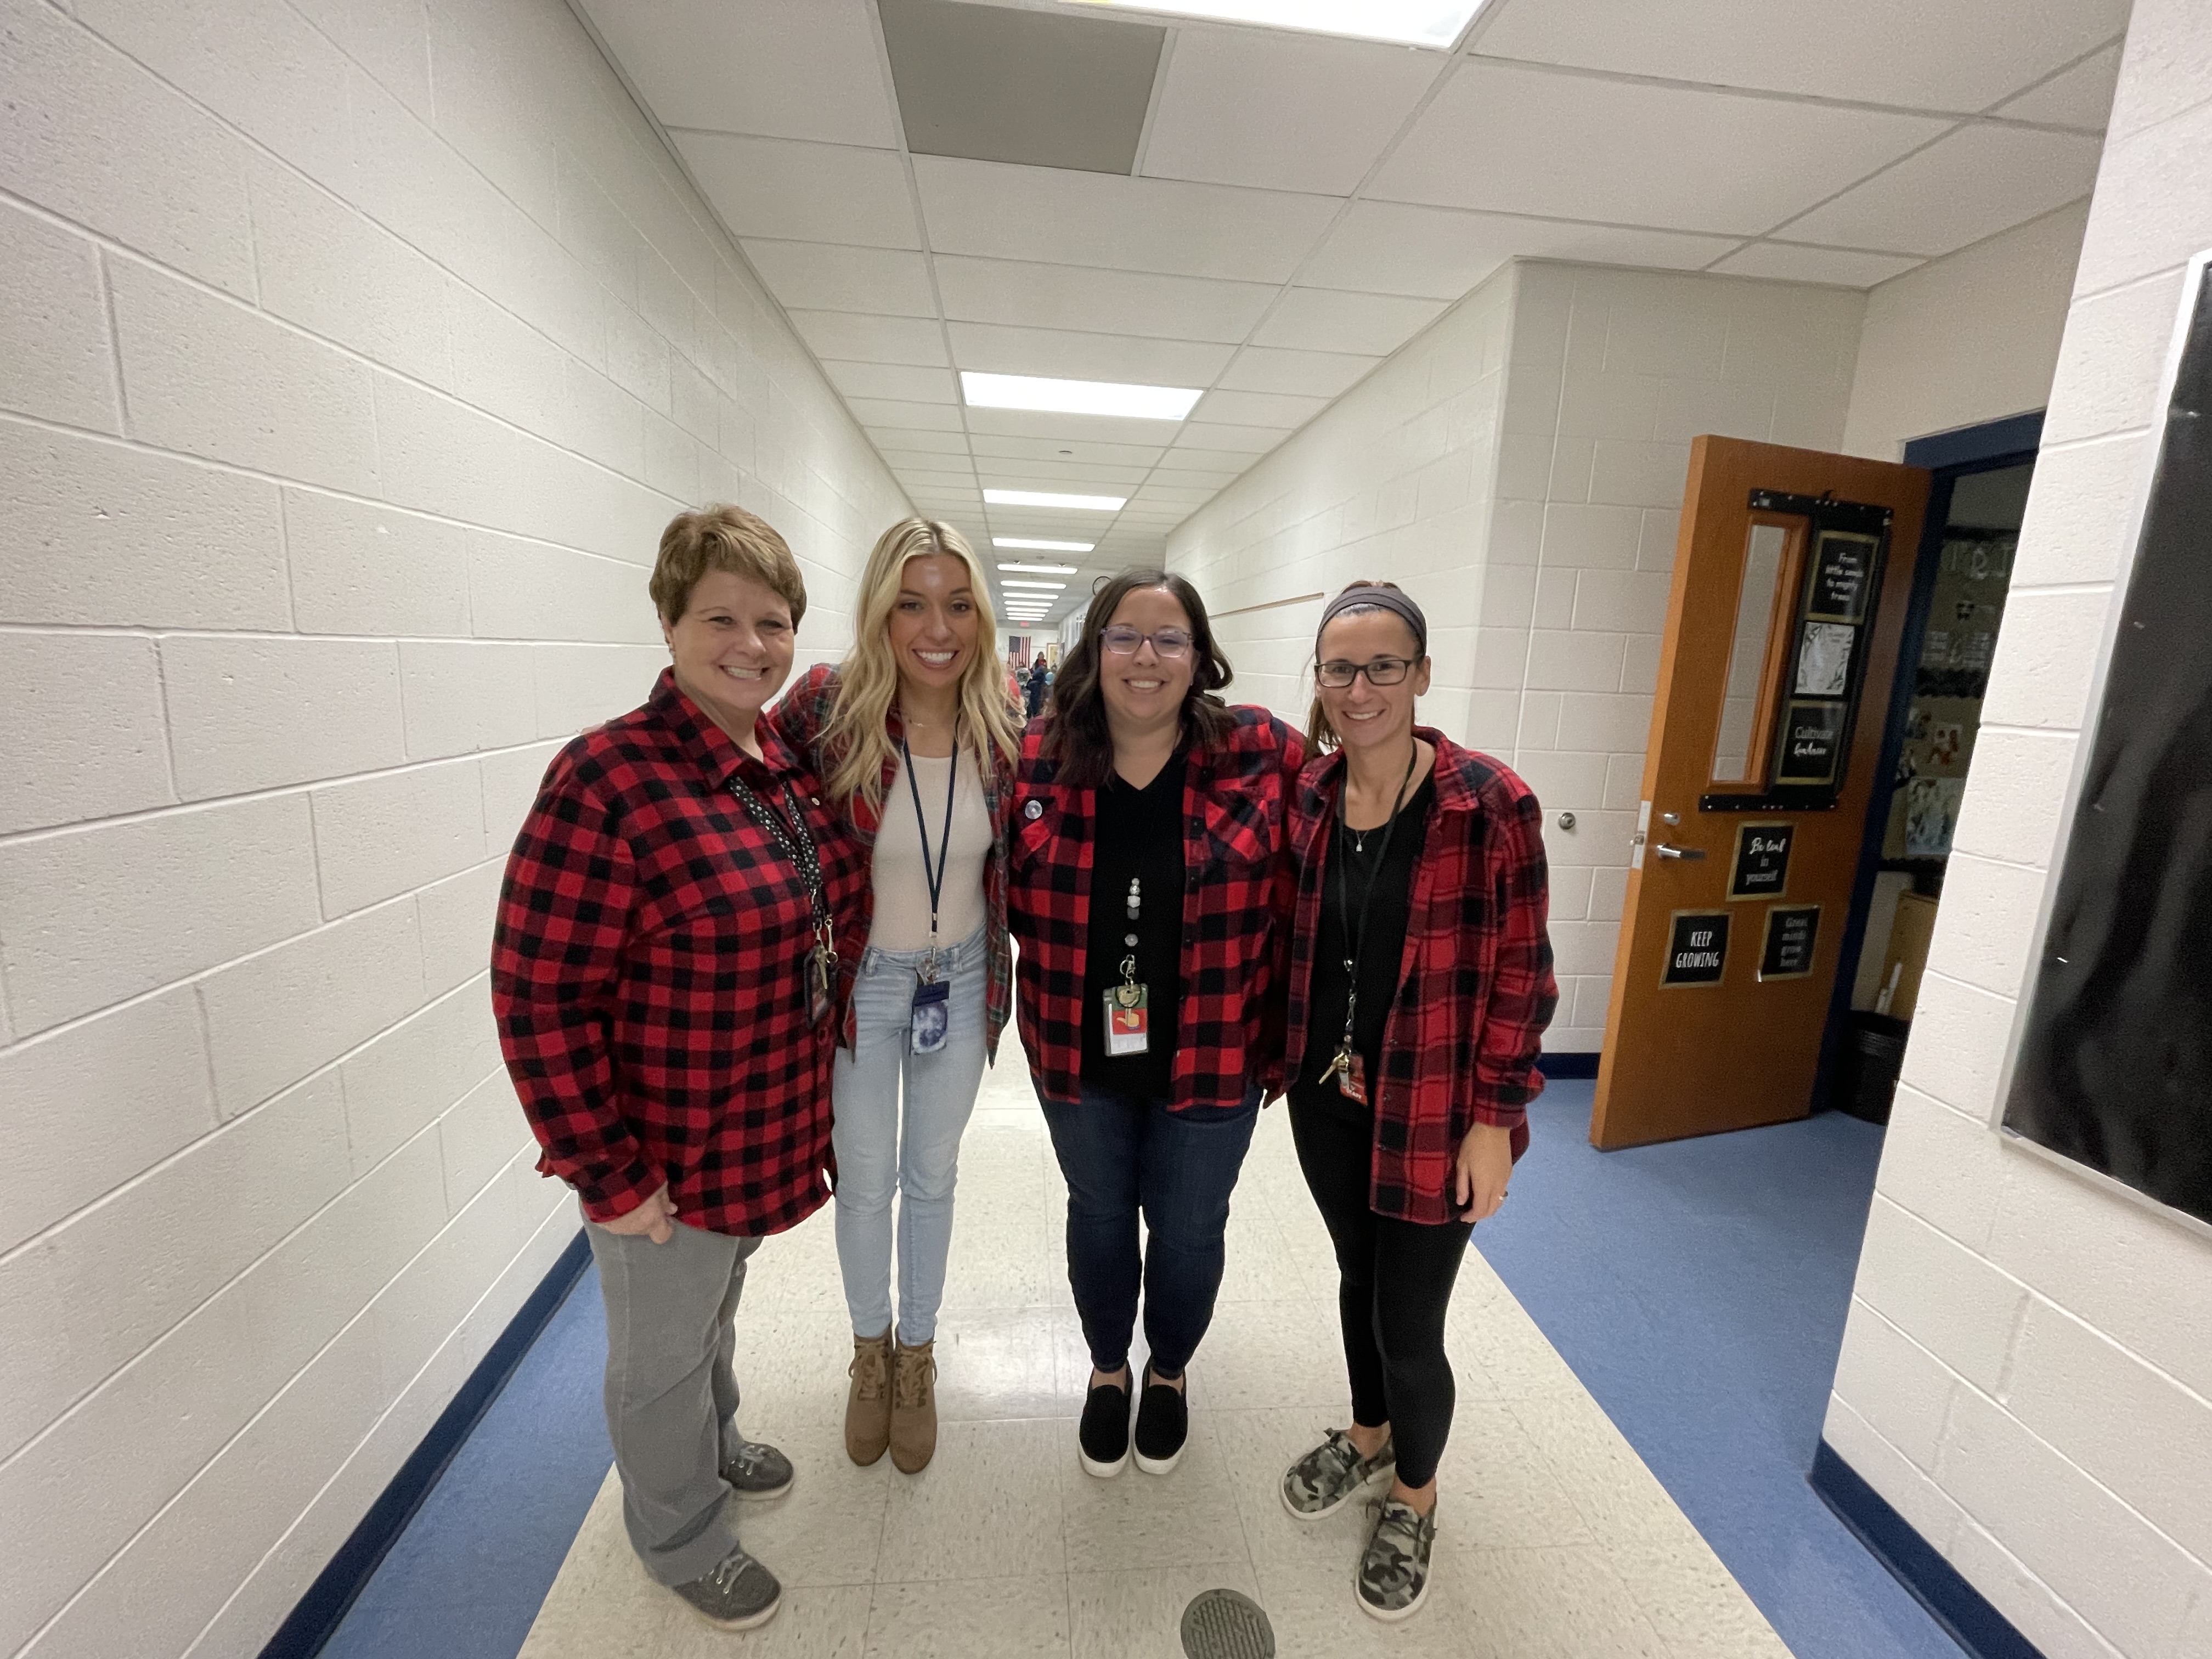 Four teachers dressed in plaid